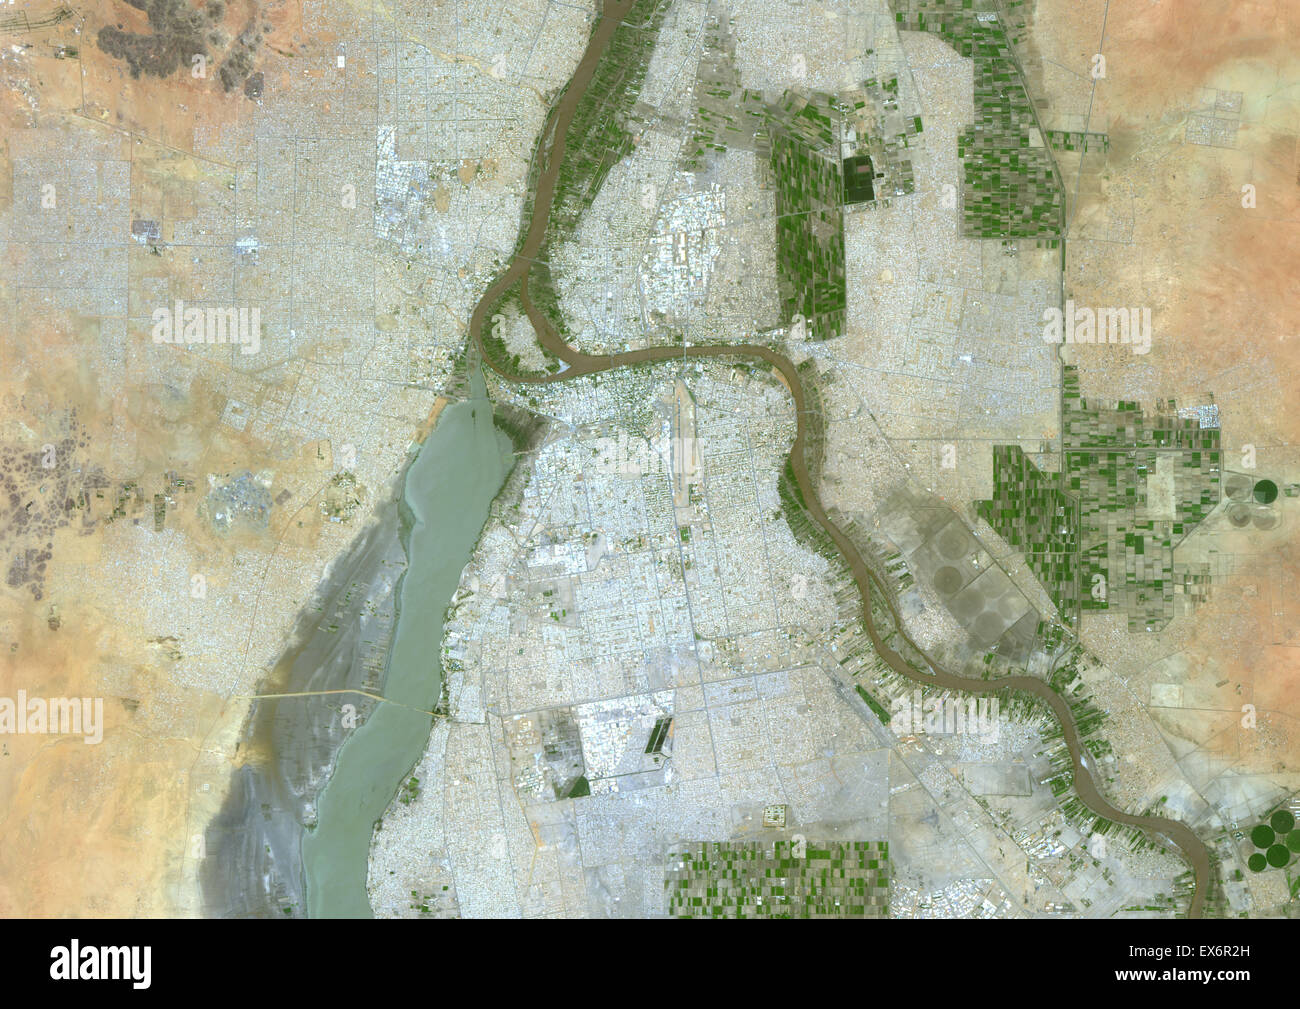 Colour satellite image of Khartoum, Sudan. Image taken on July 16, 2014 with Landsat 8 data. Stock Photo